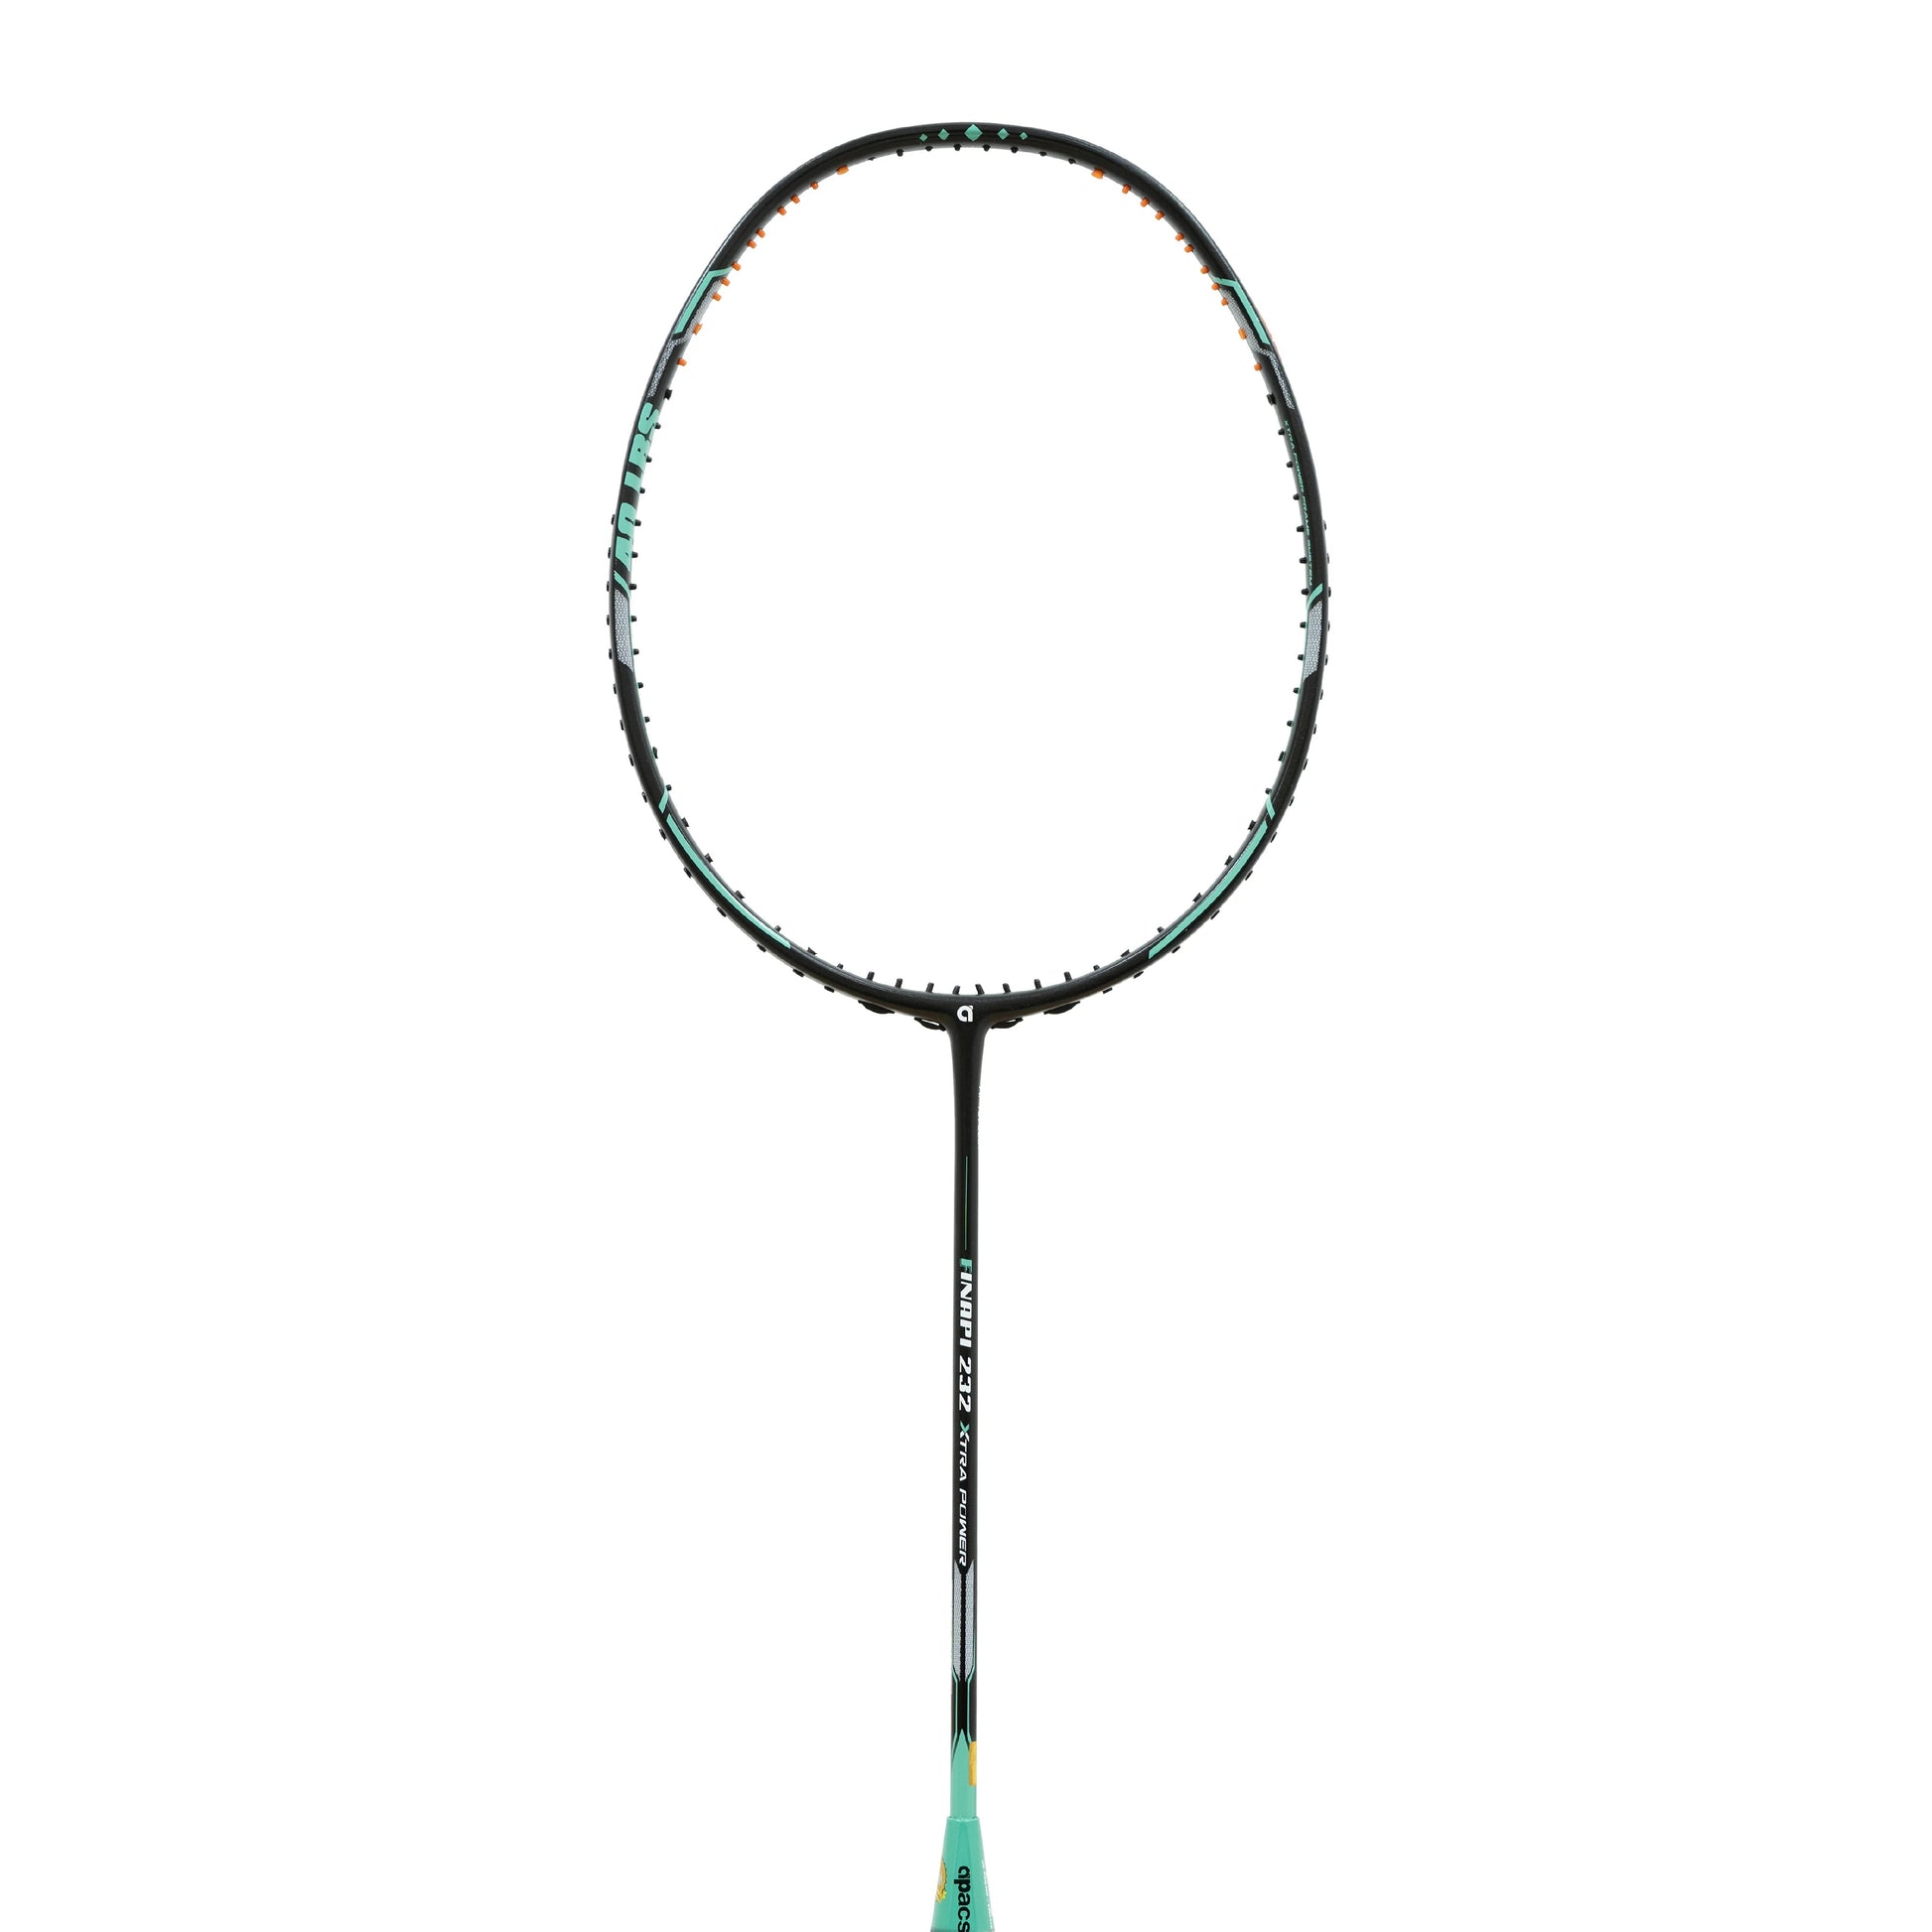 Apacs Finapi 232 Xtra Power Badminton Racket - without Cover - Best Price online Prokicksports.com